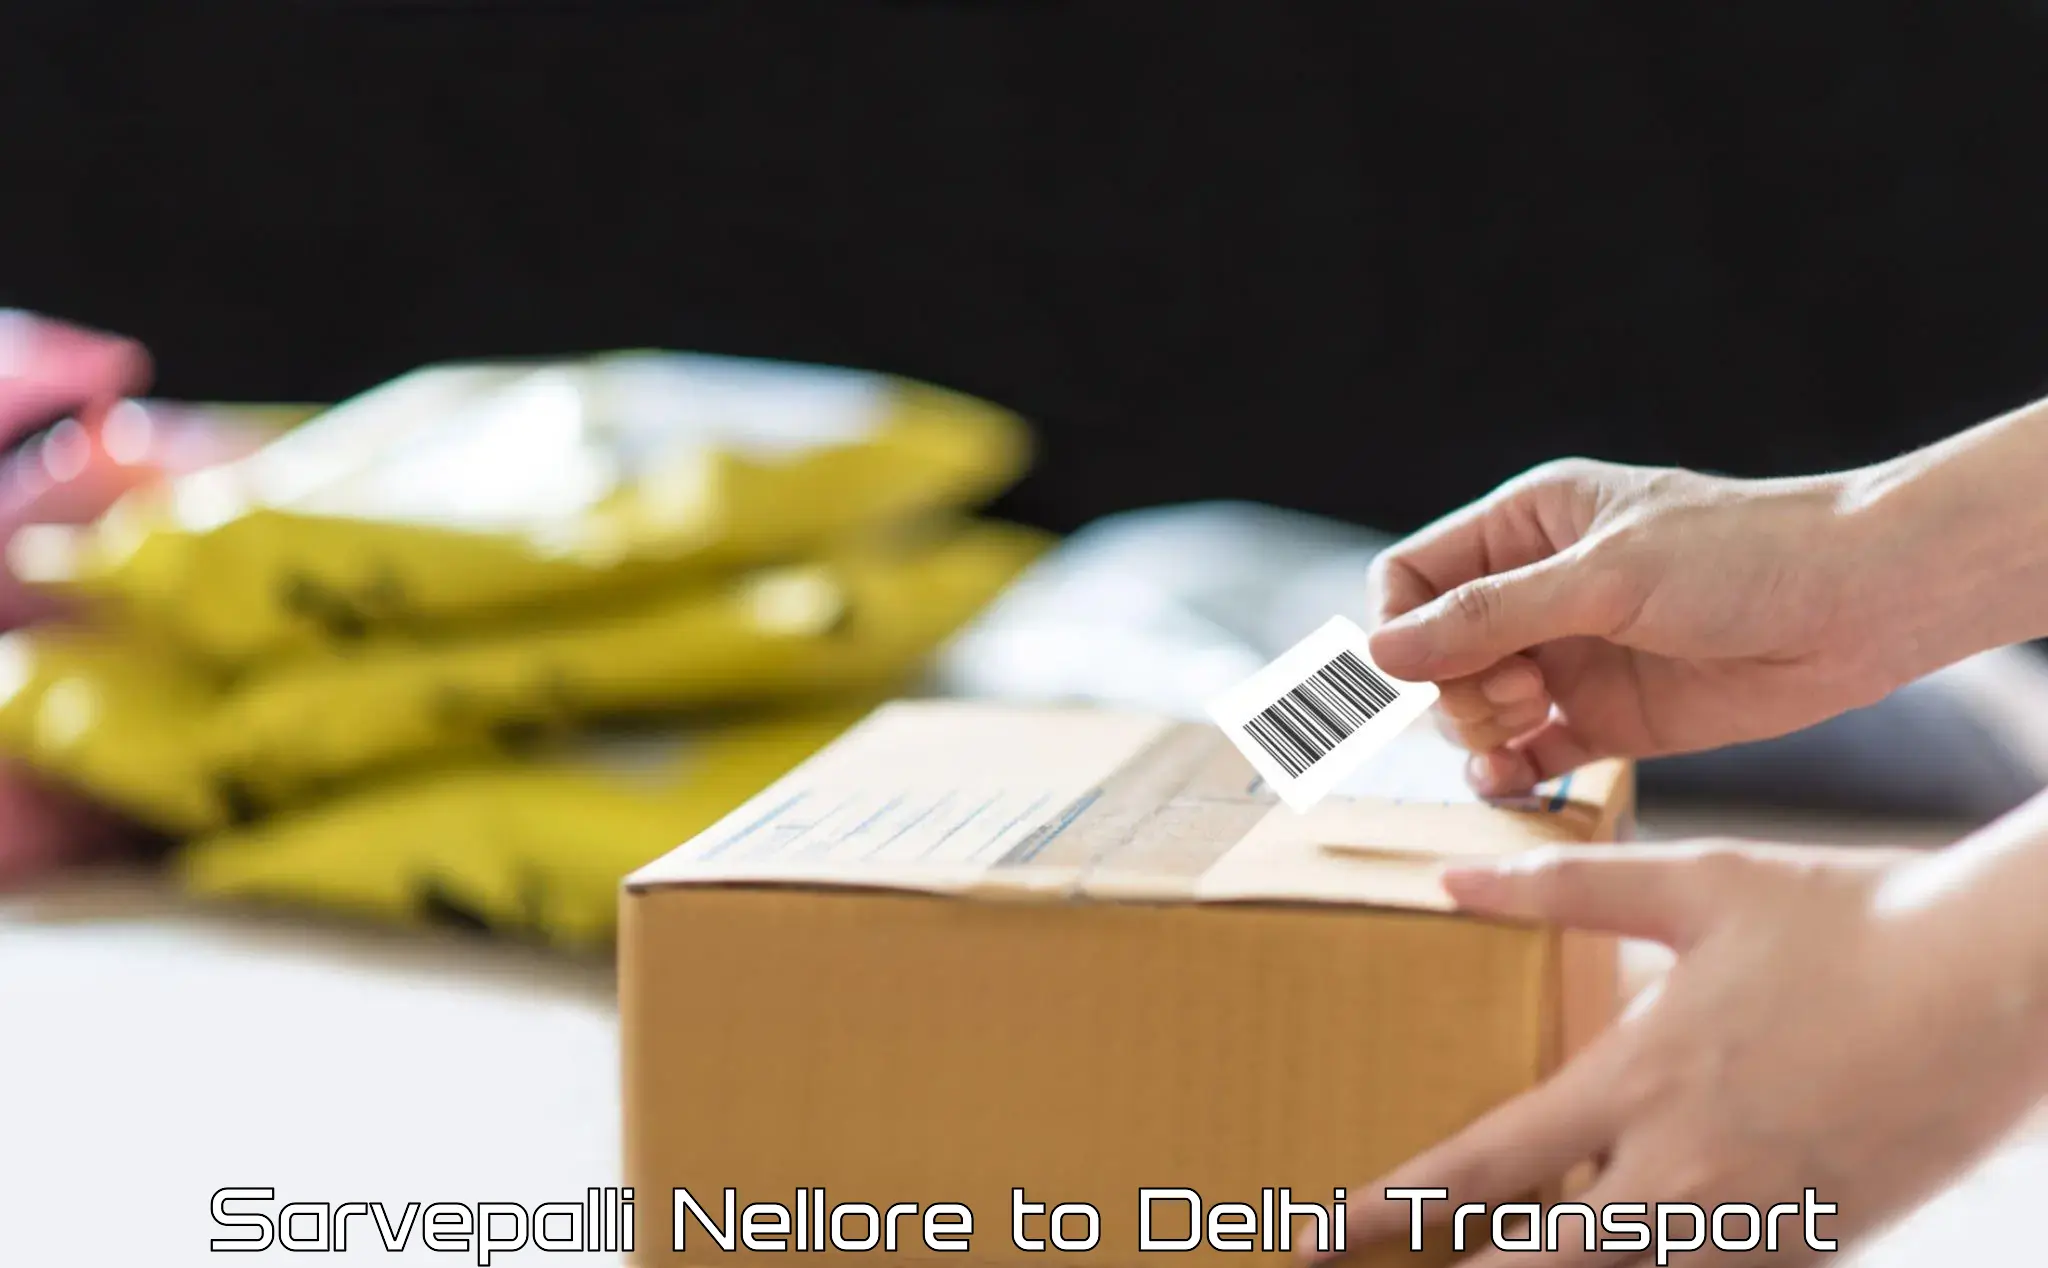 Online transport service Sarvepalli Nellore to Delhi